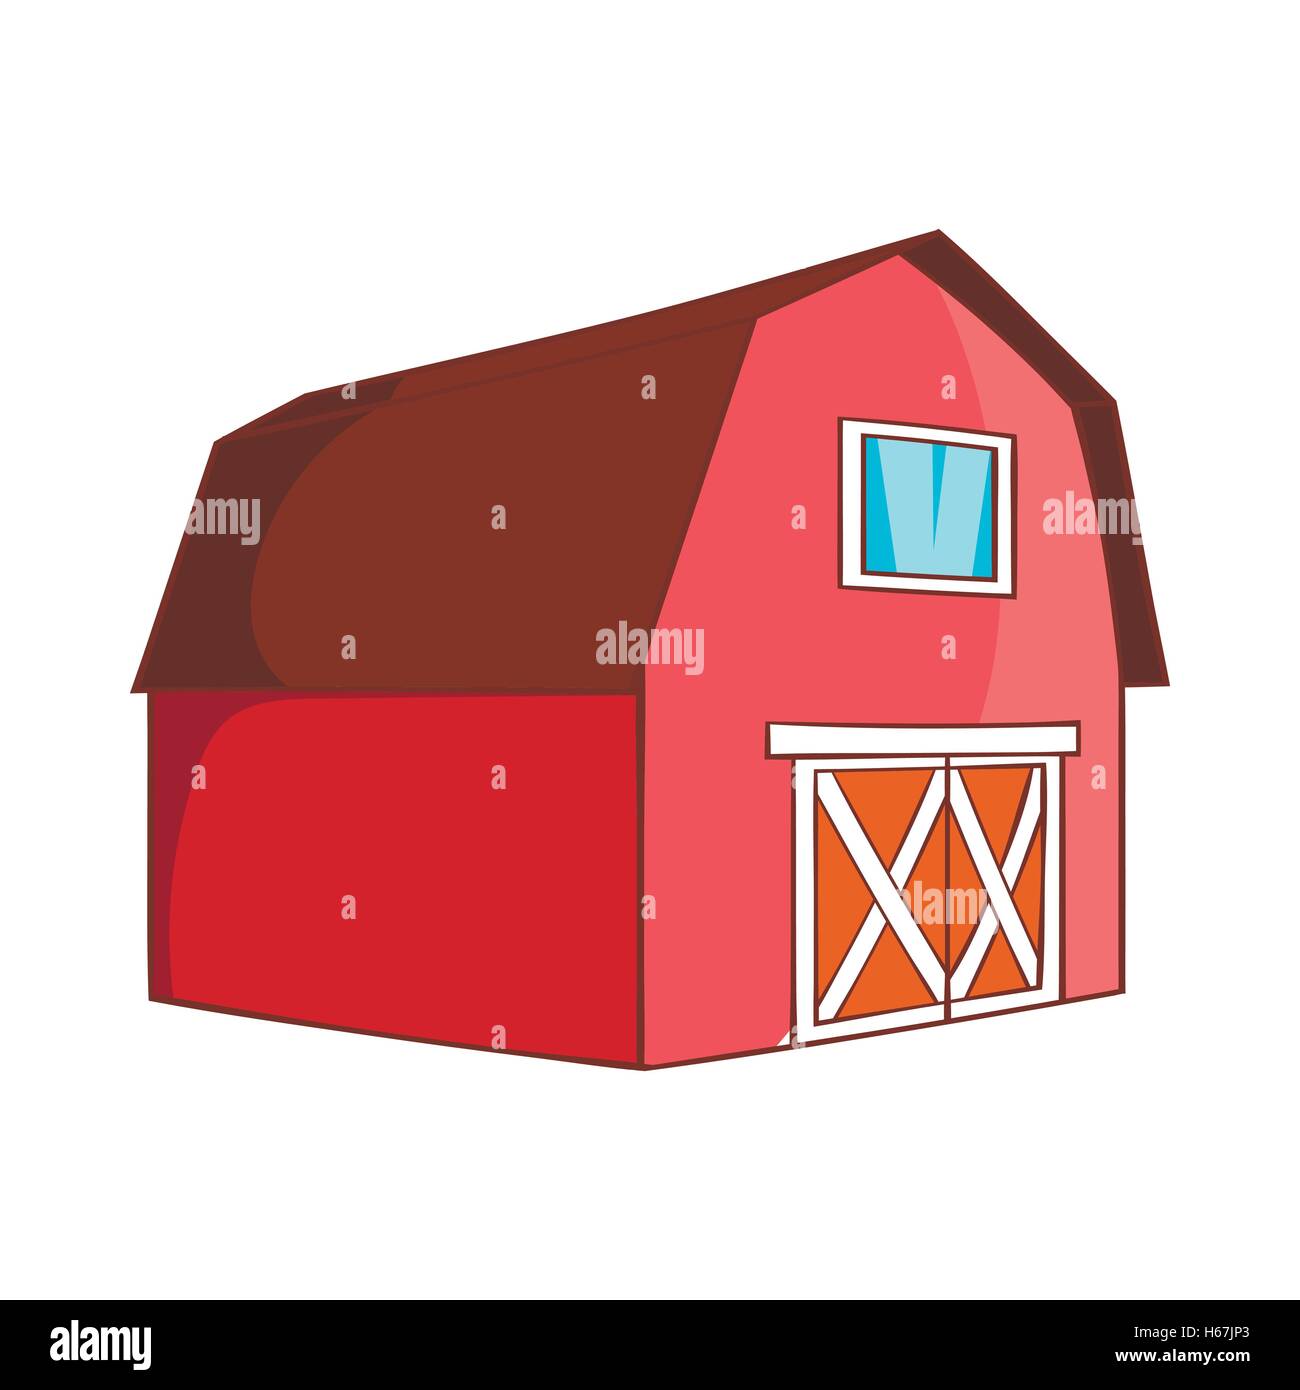 Barn for animals icon, cartoon style Stock Vector